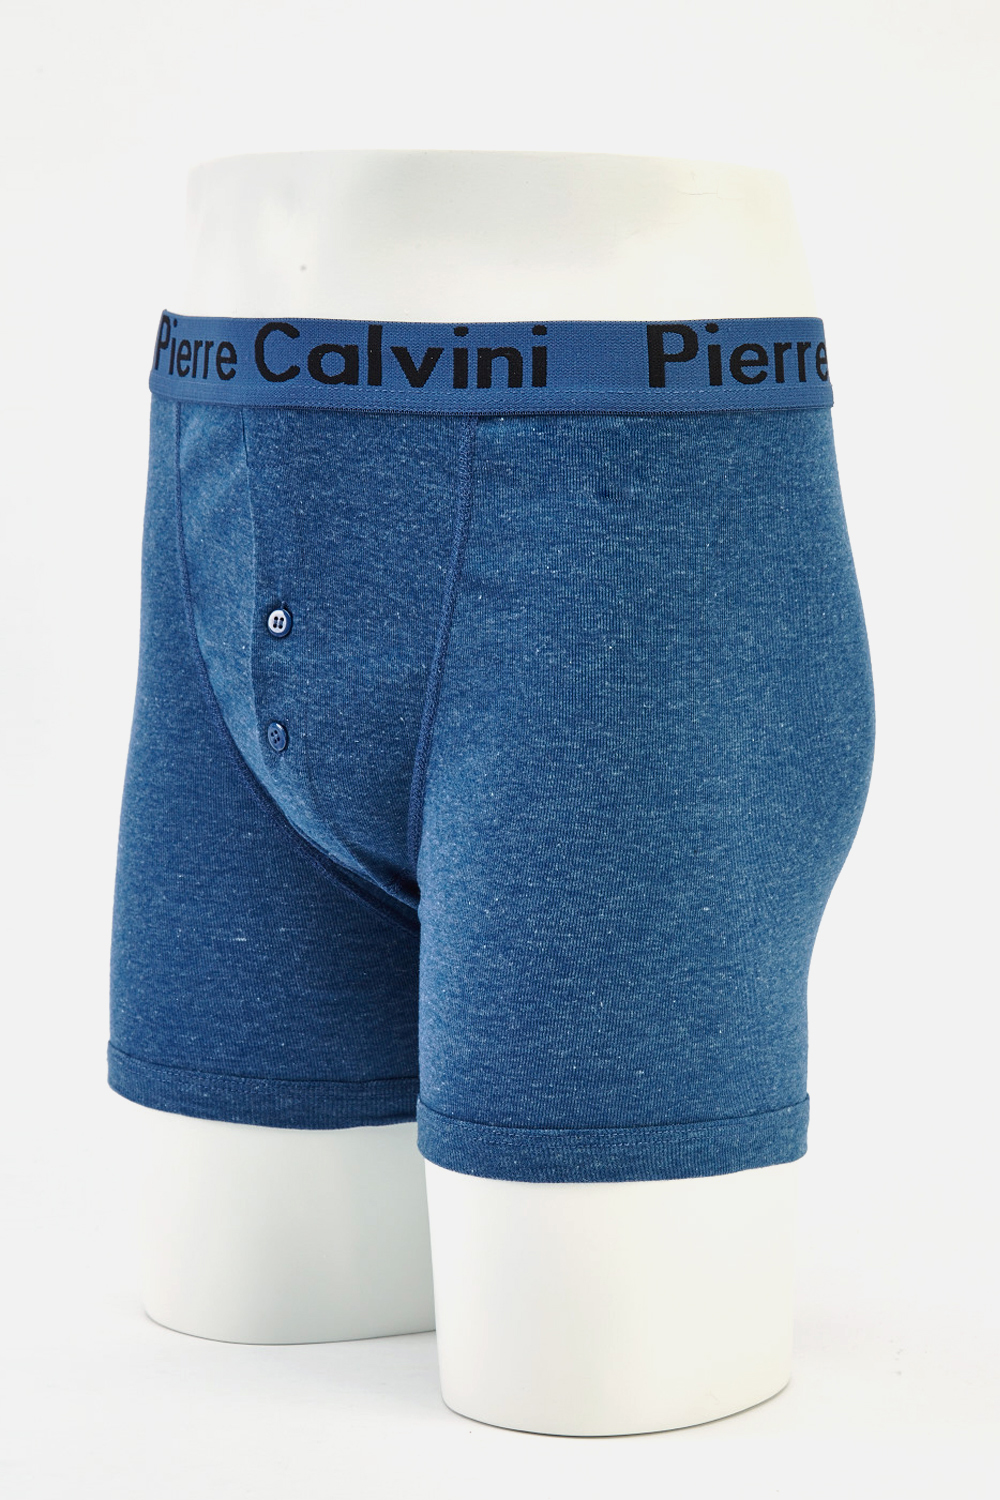 pierre calvini boxer shorts